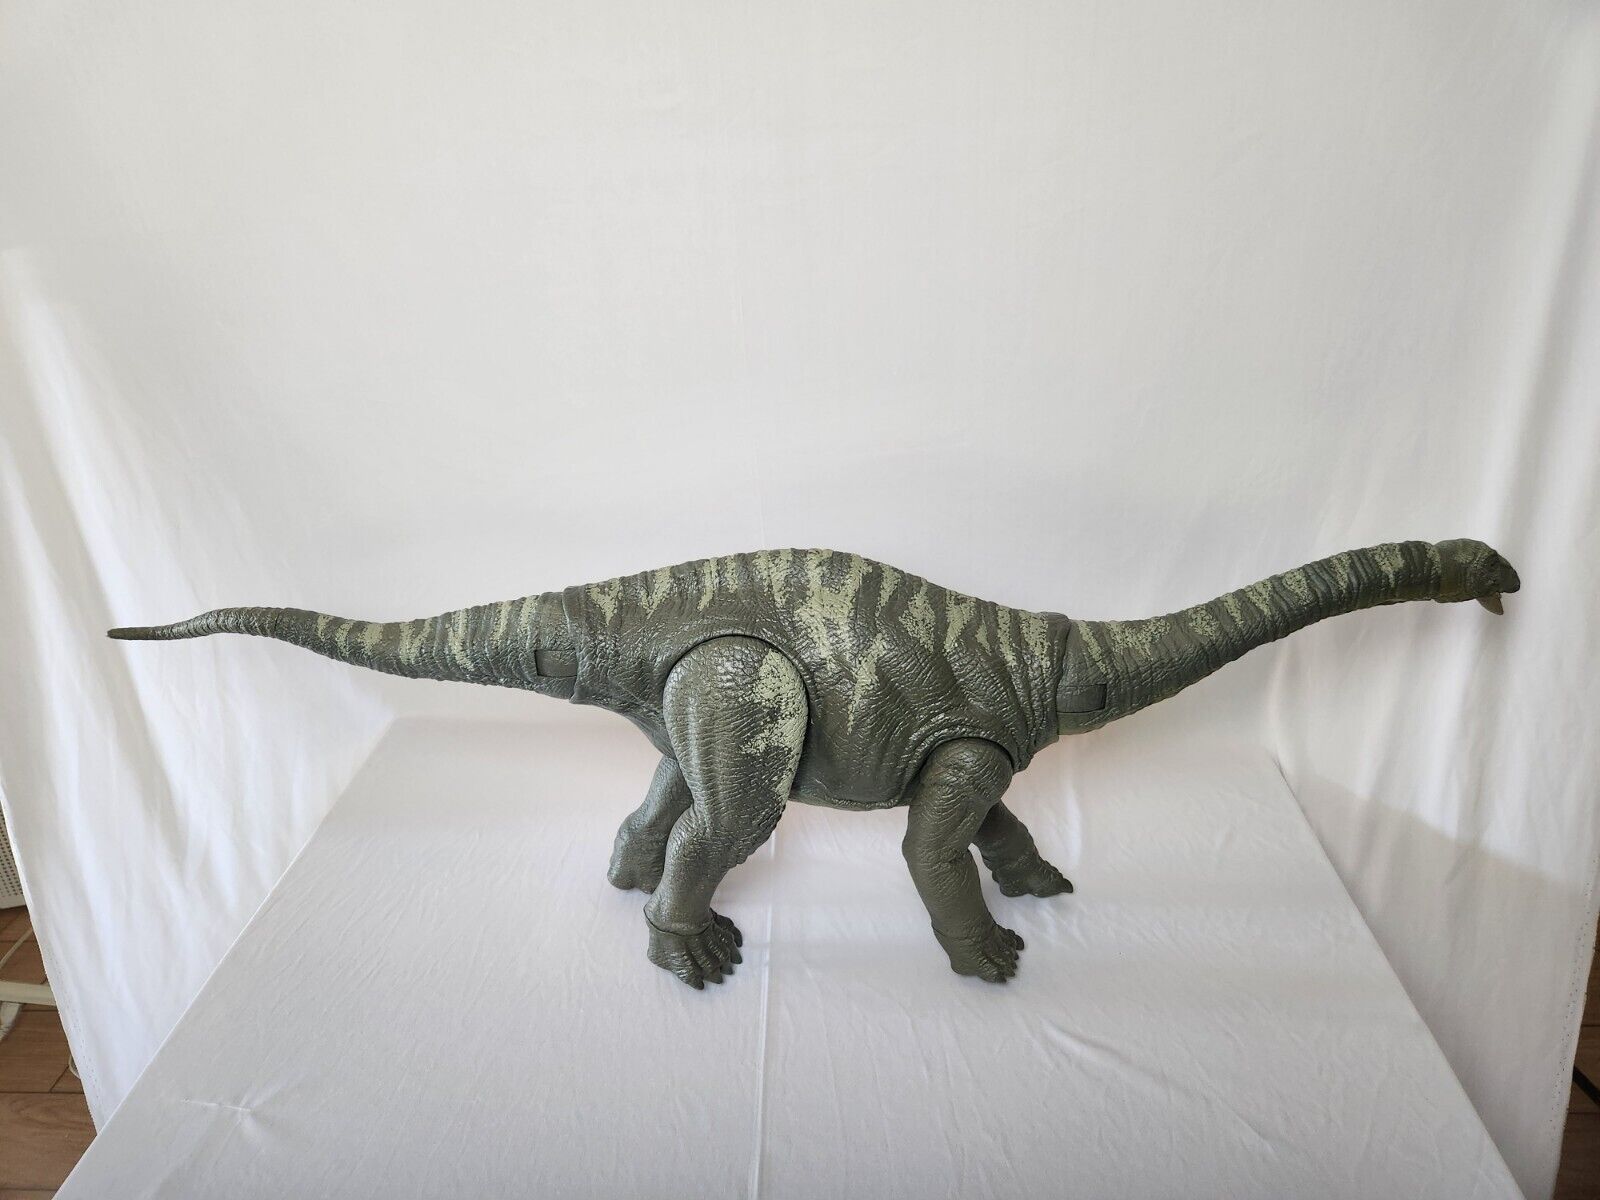 Huge - Large Plastic Brachiosaurus Dinosaur Toy Flexible Adjustable over 2 FT